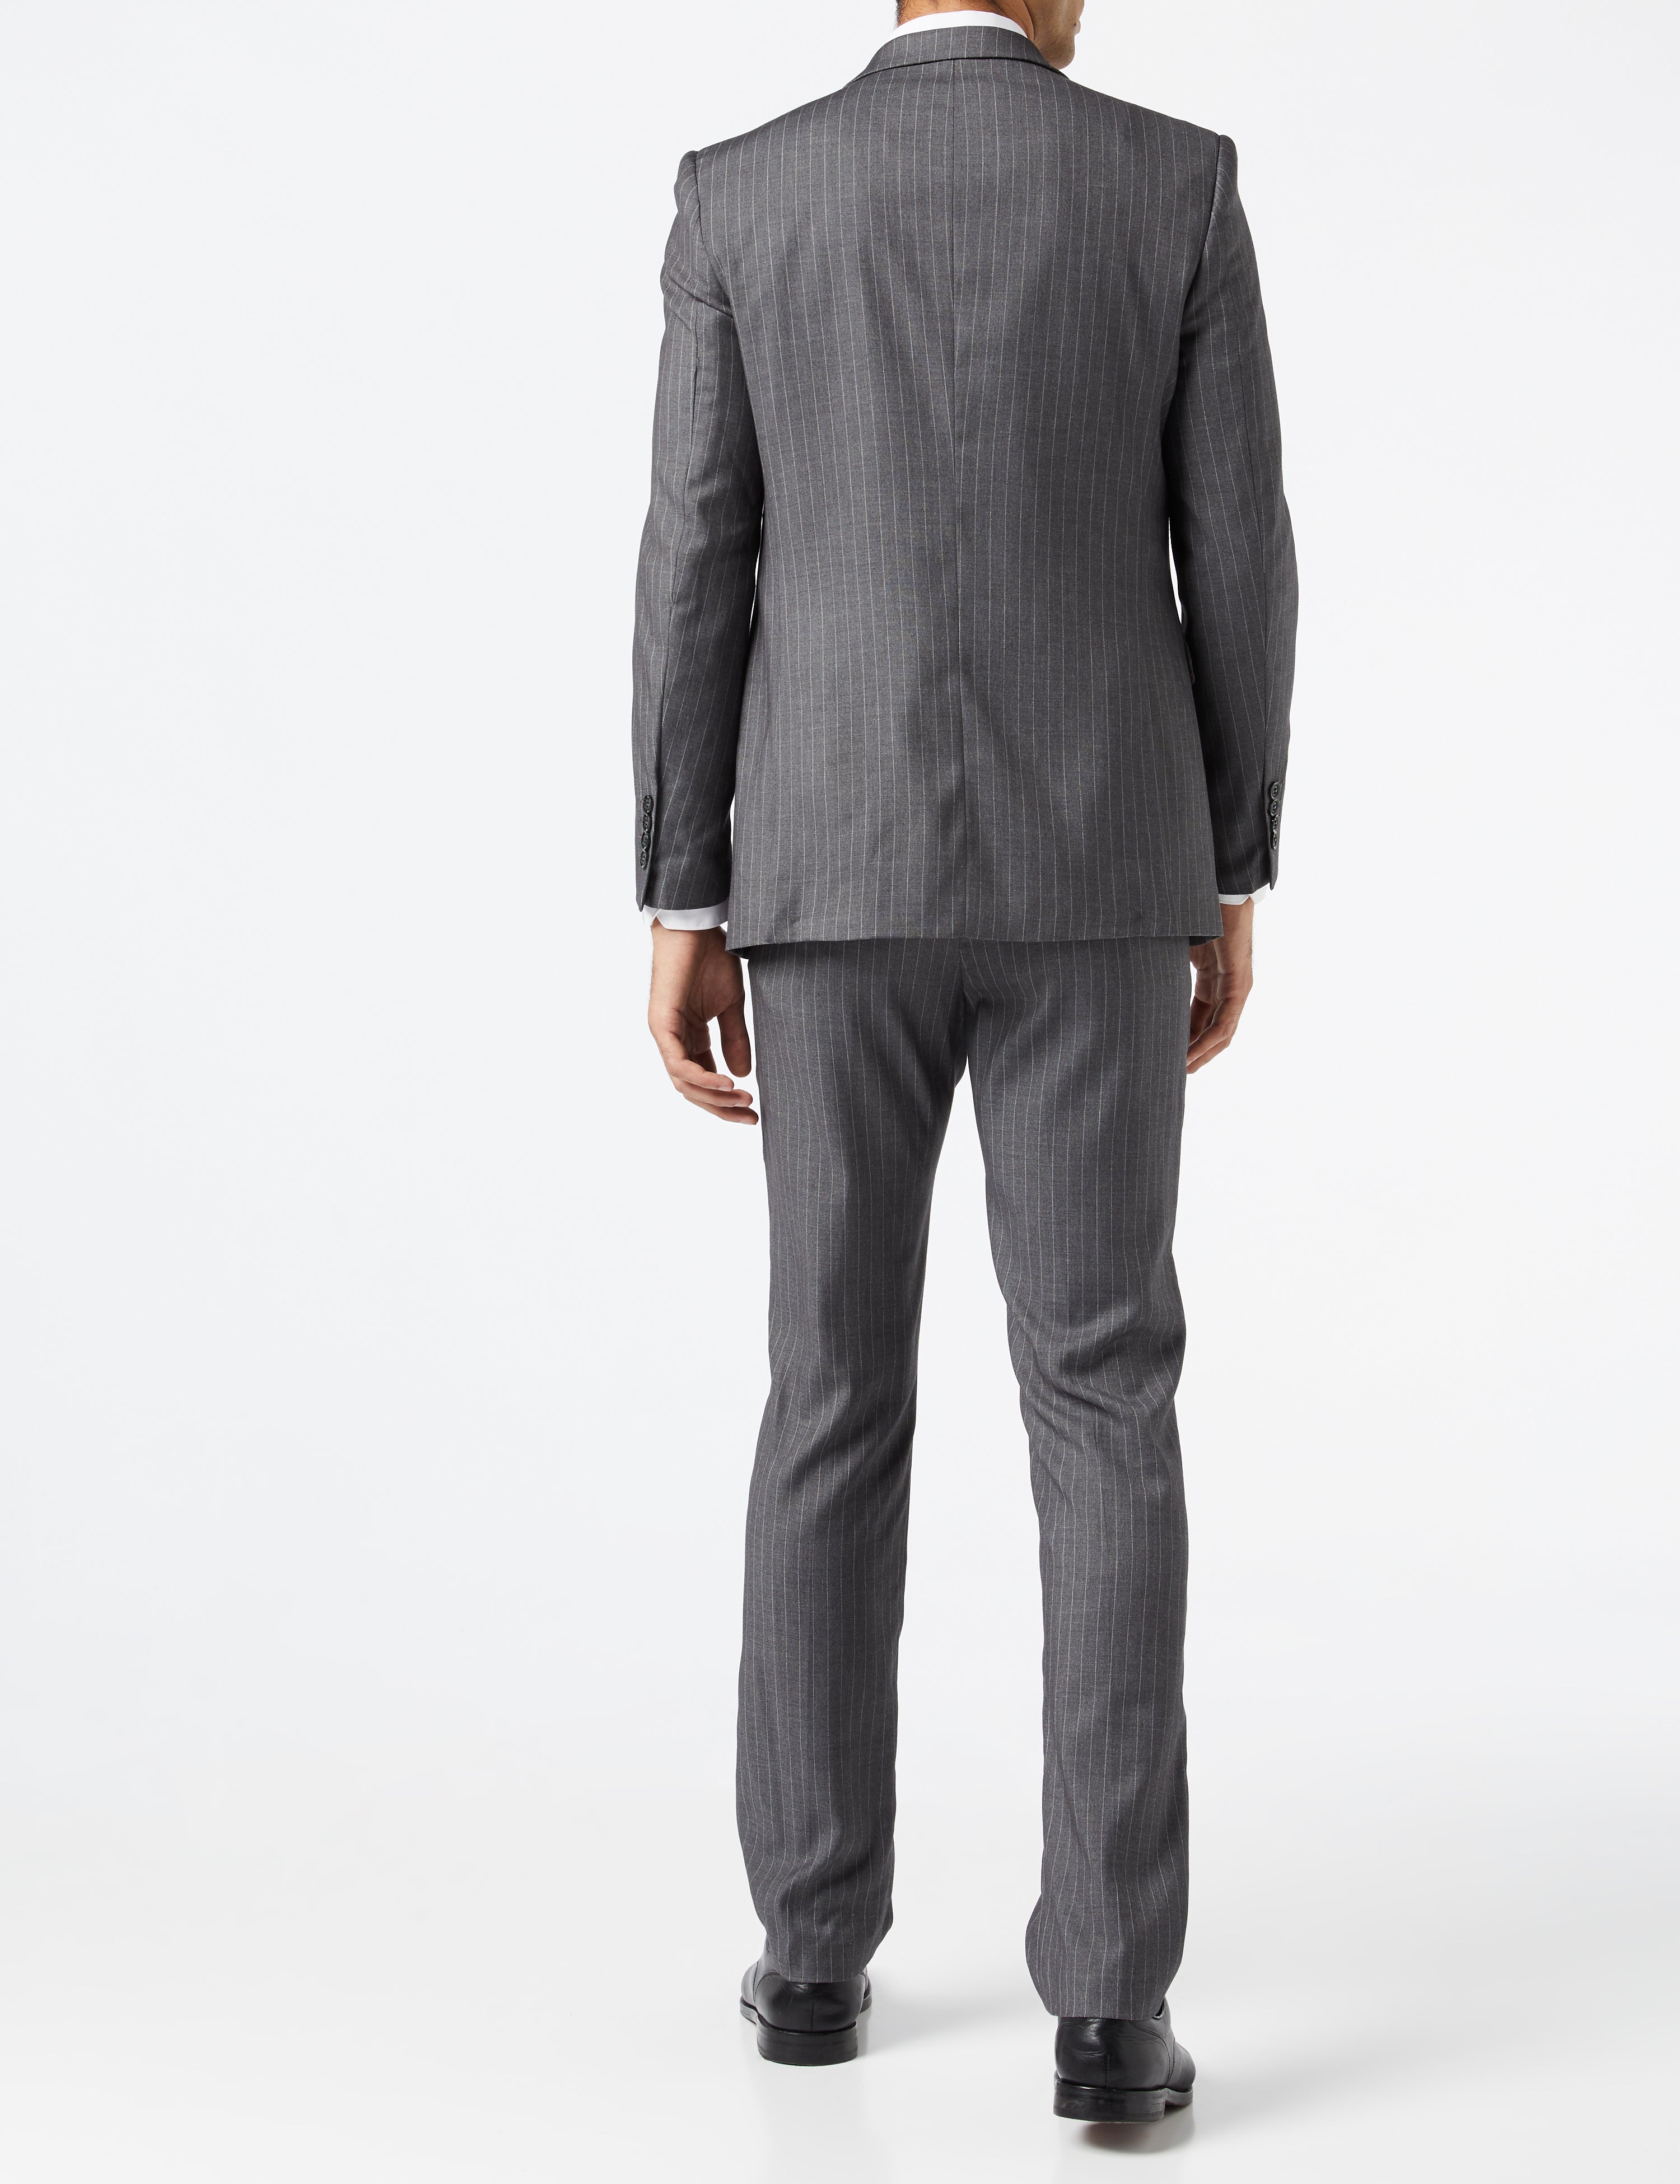 6 Piece Pin Stripe Grey Suit